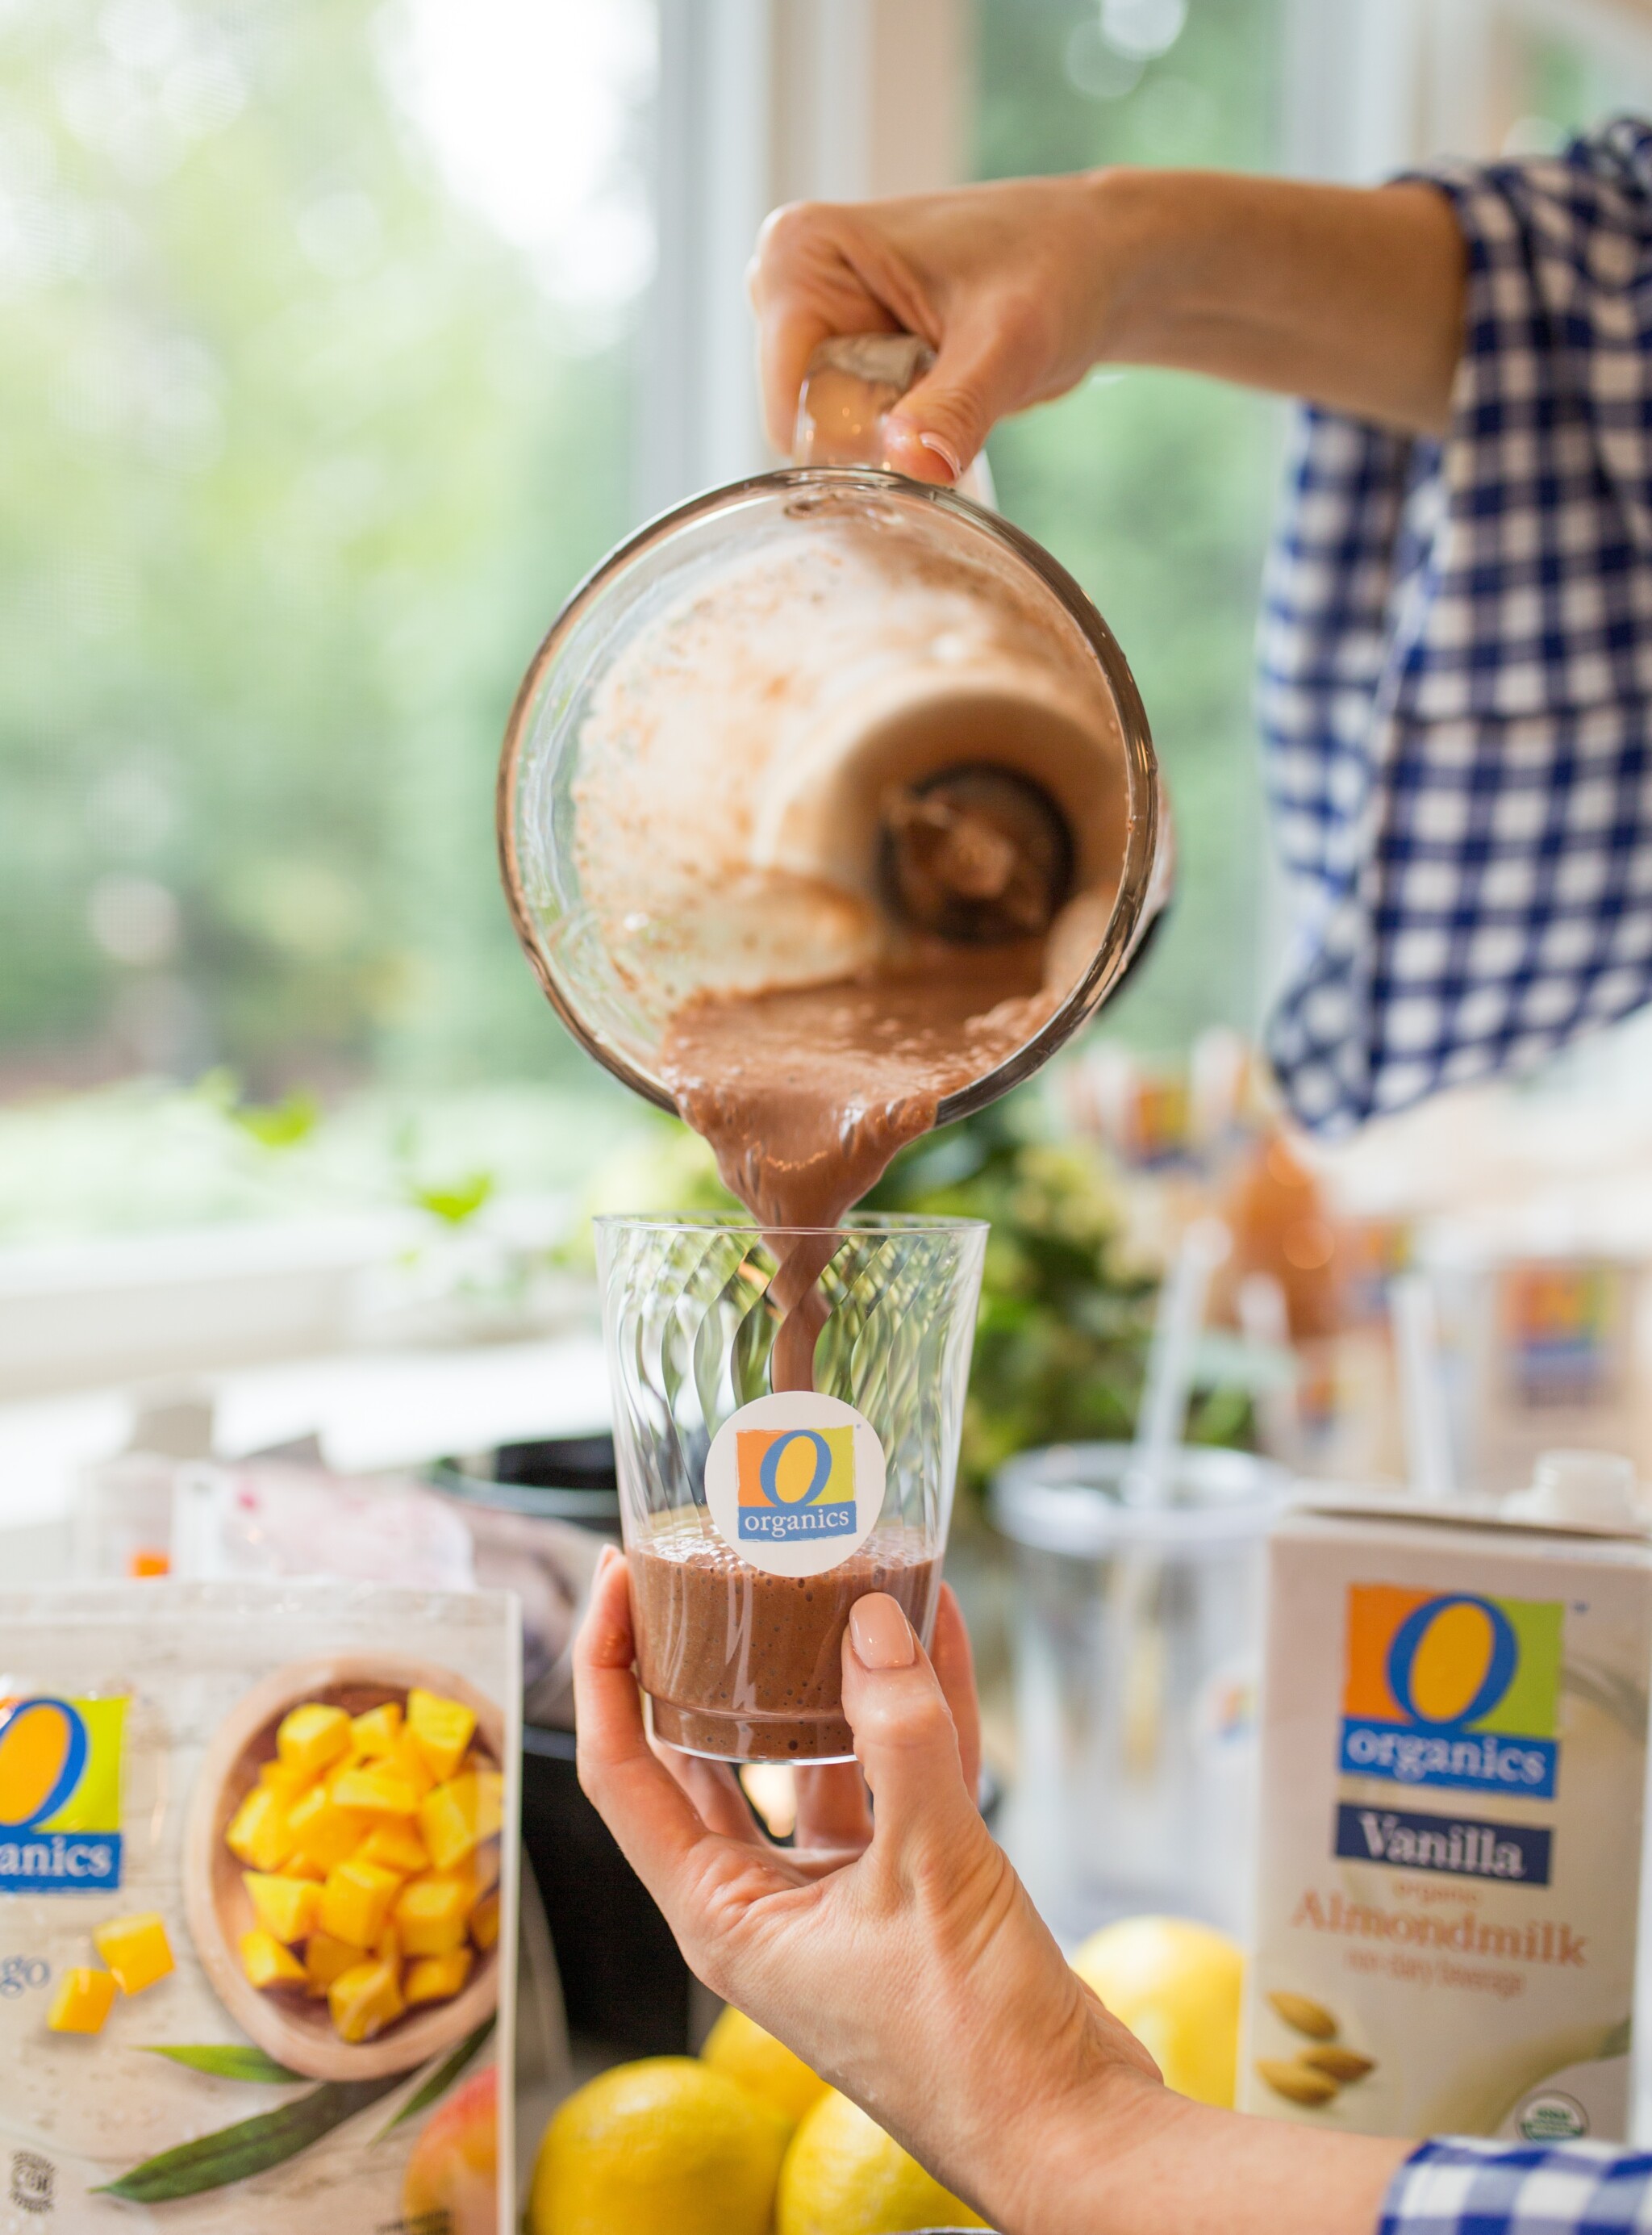 Snacking Smart with O Organics